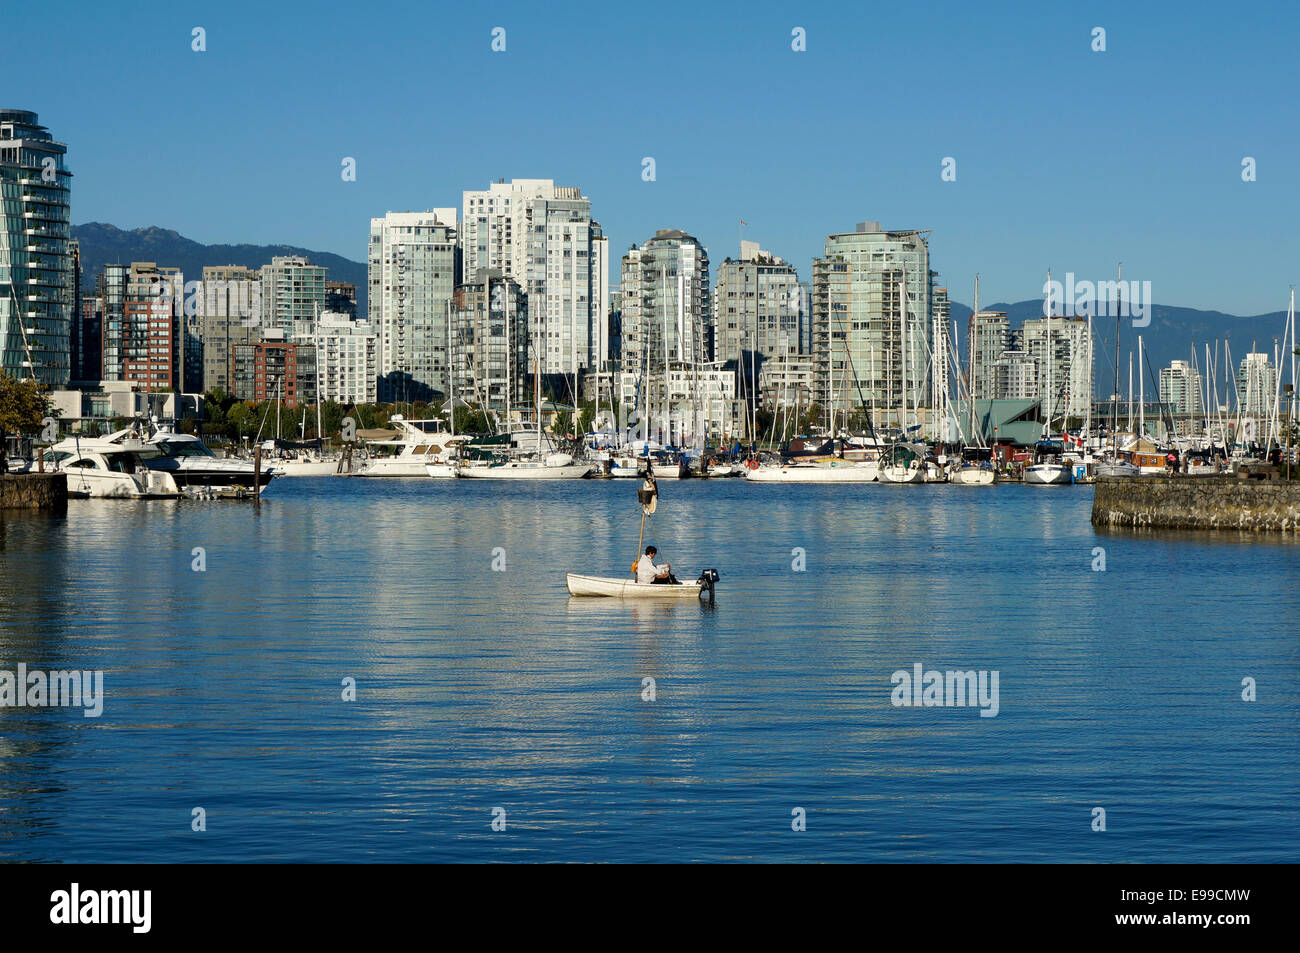 Man sitting alone in a small sailboat, False Creek, Vancouver, British Columbia, Canada Stock Photo